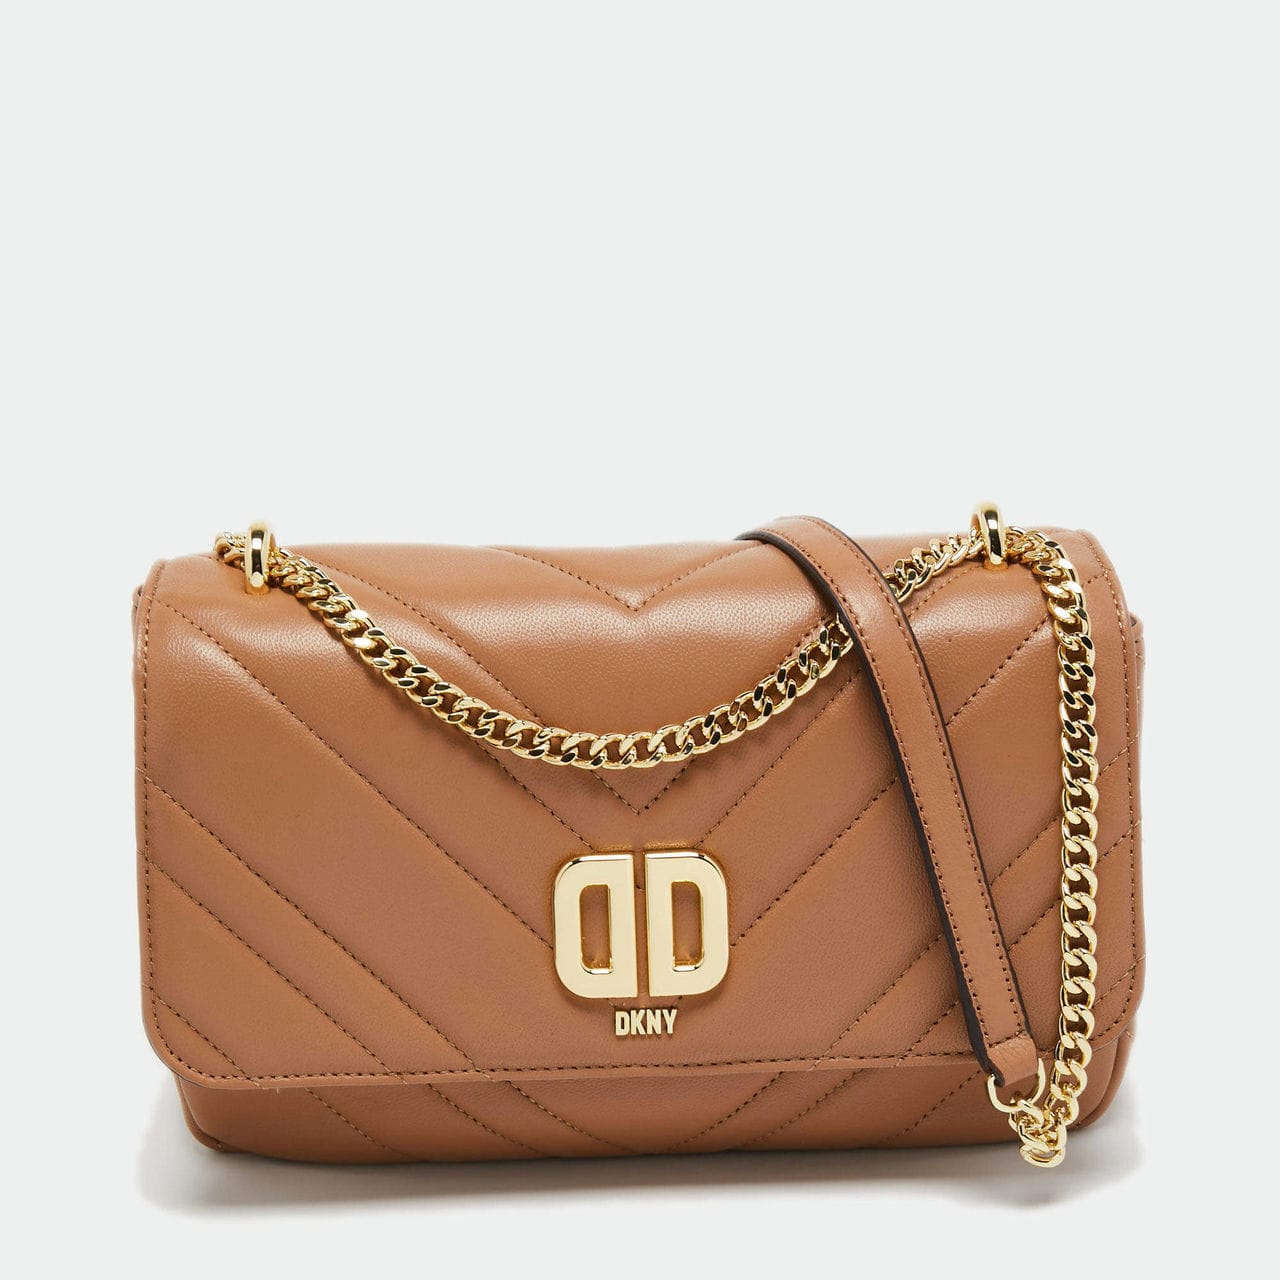 Brands shopping for less Qatar - Original DKNY bag